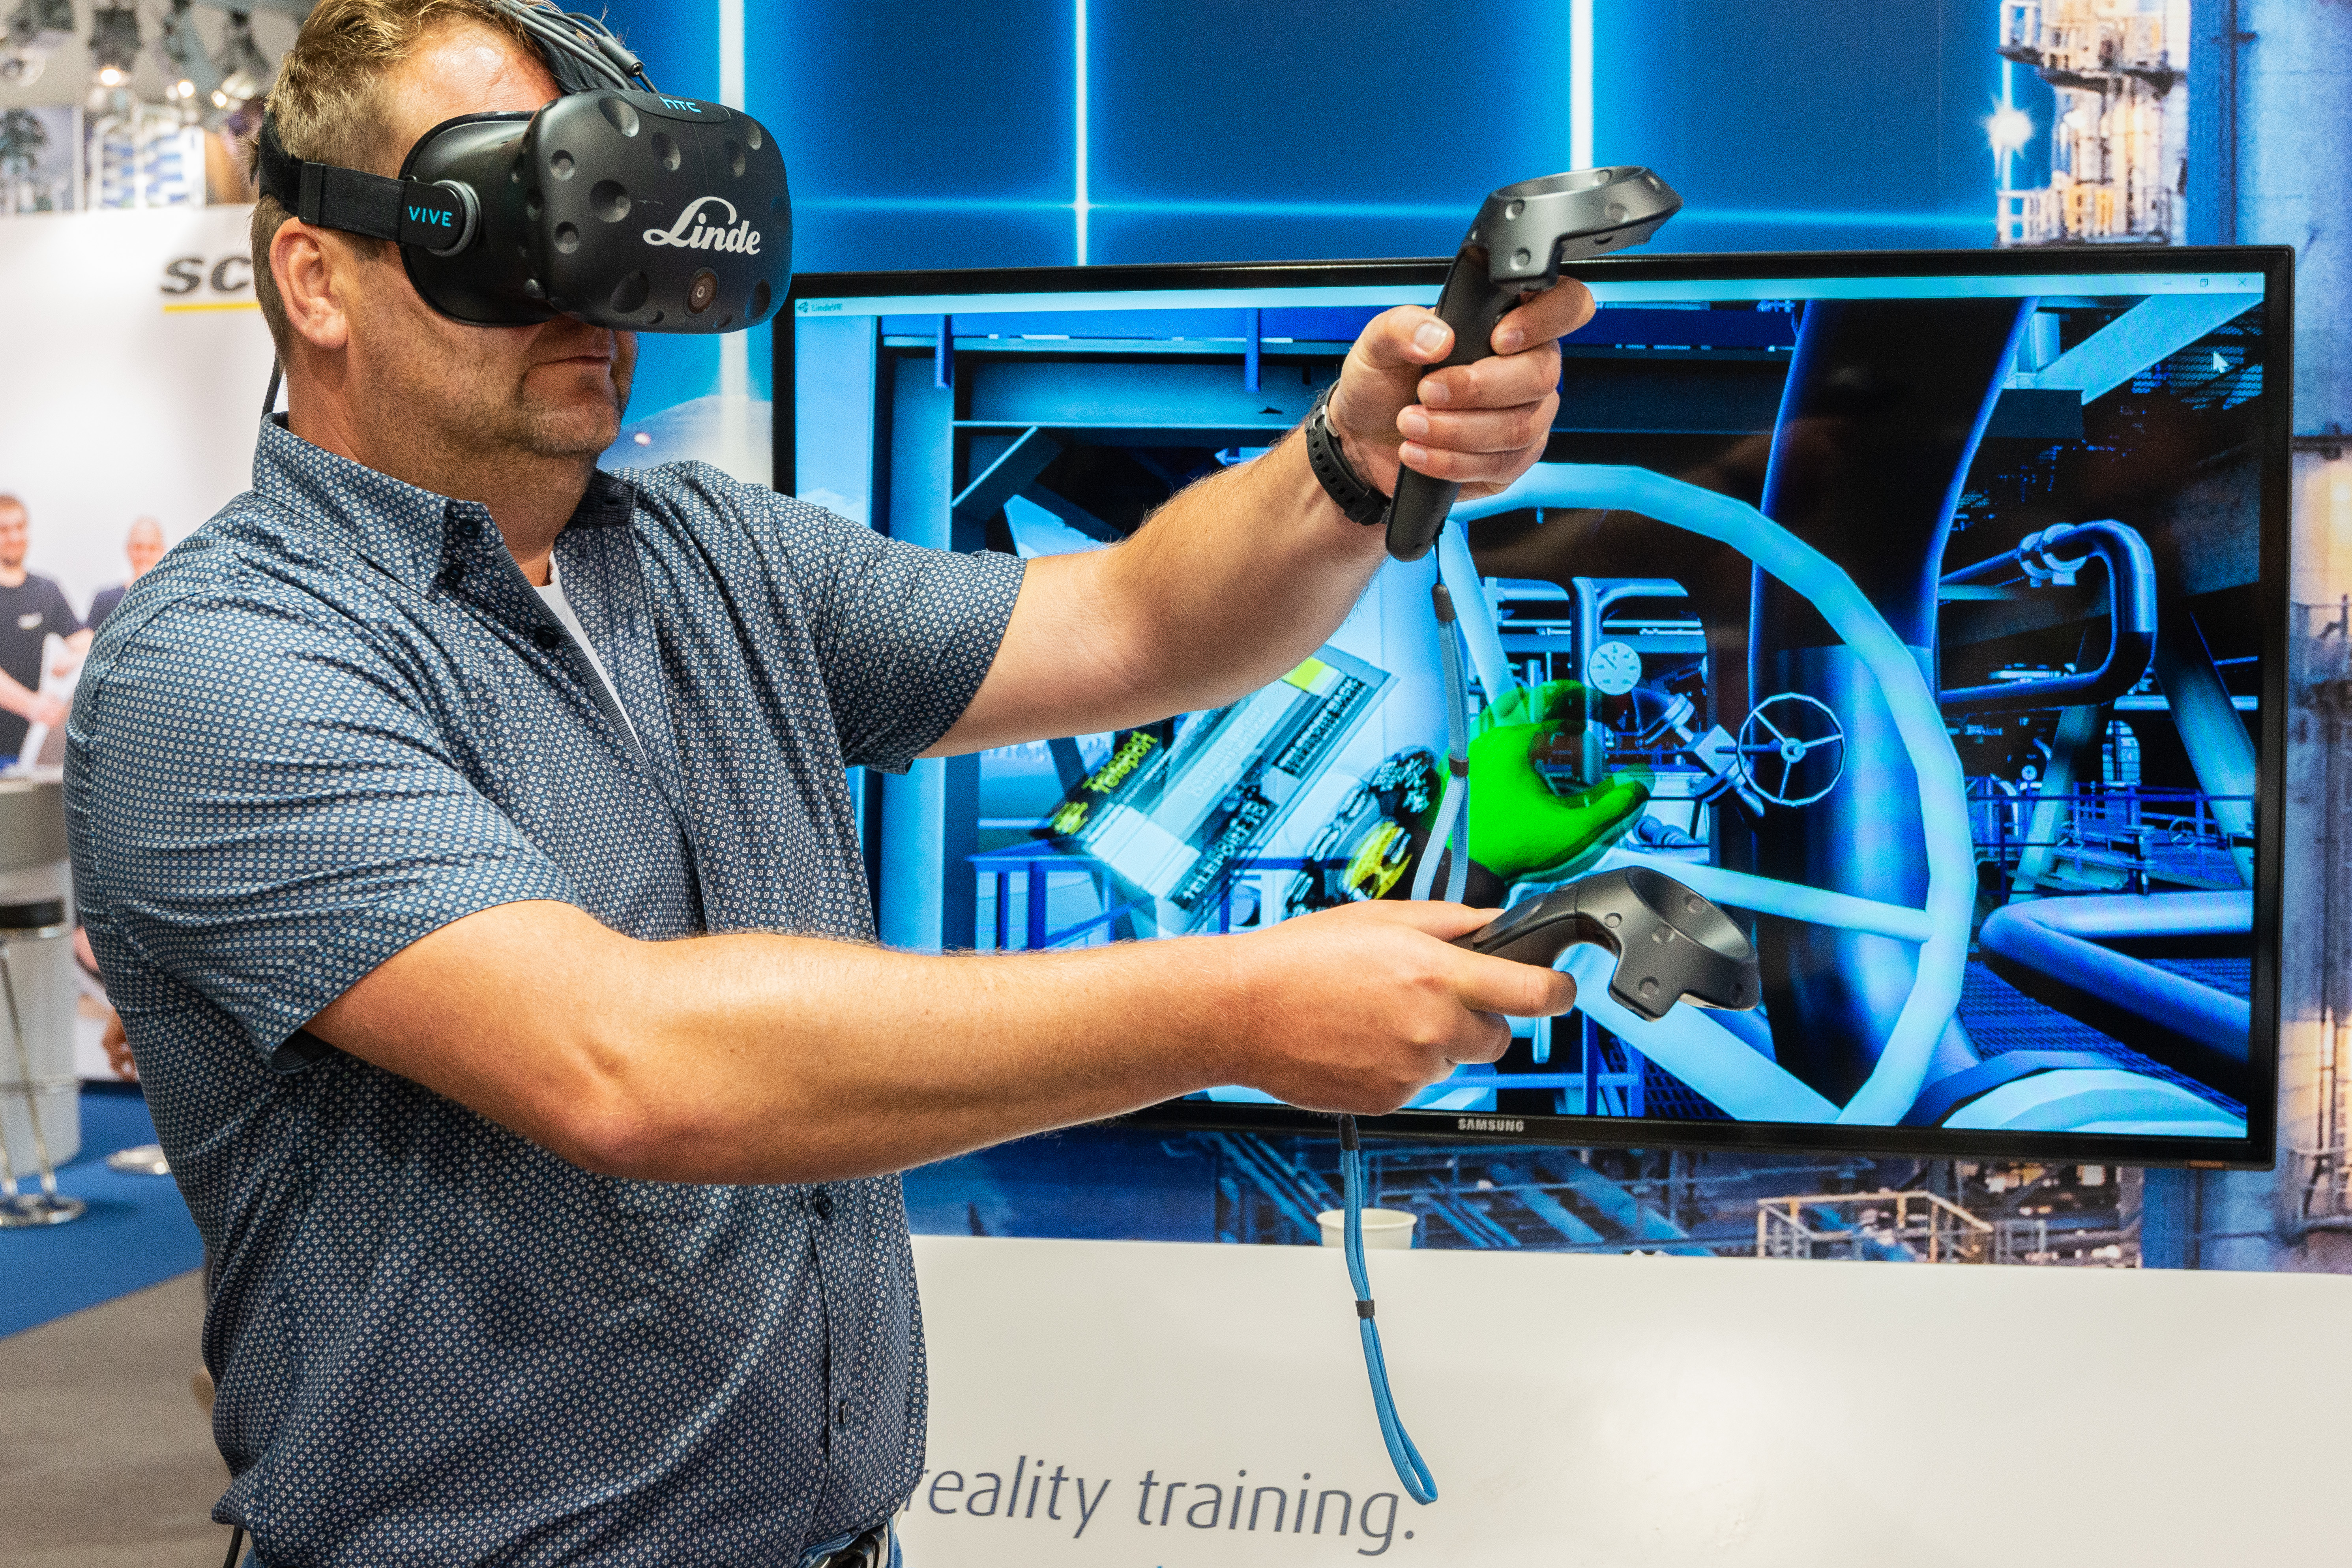 LVA trainee training in virtual reality operator training.